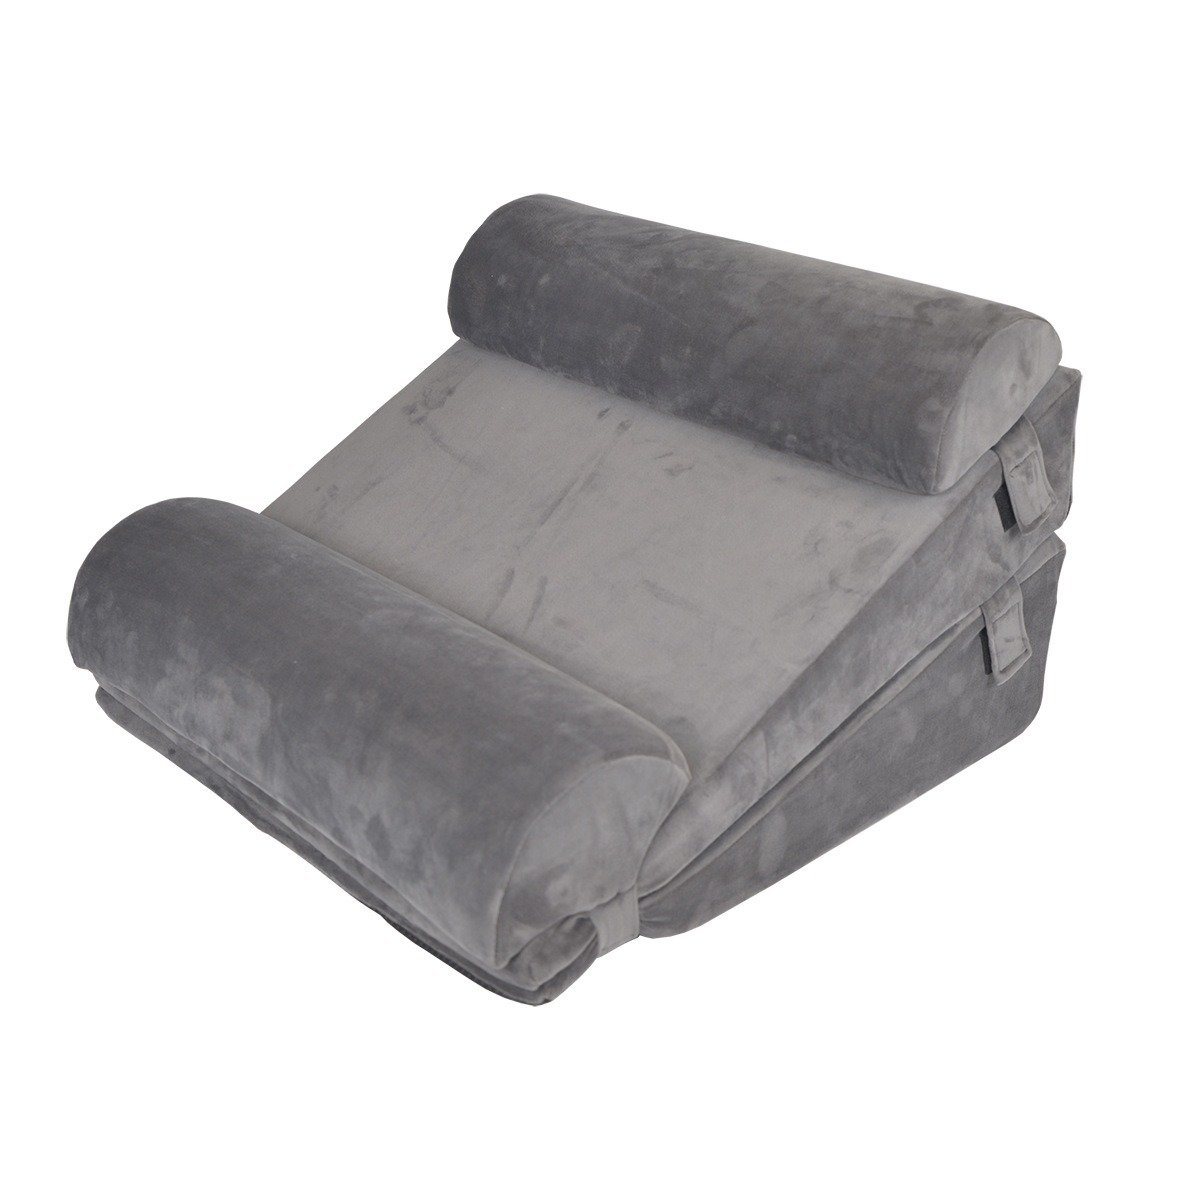 Multifunctional Wedge Pillow - Suee Foam